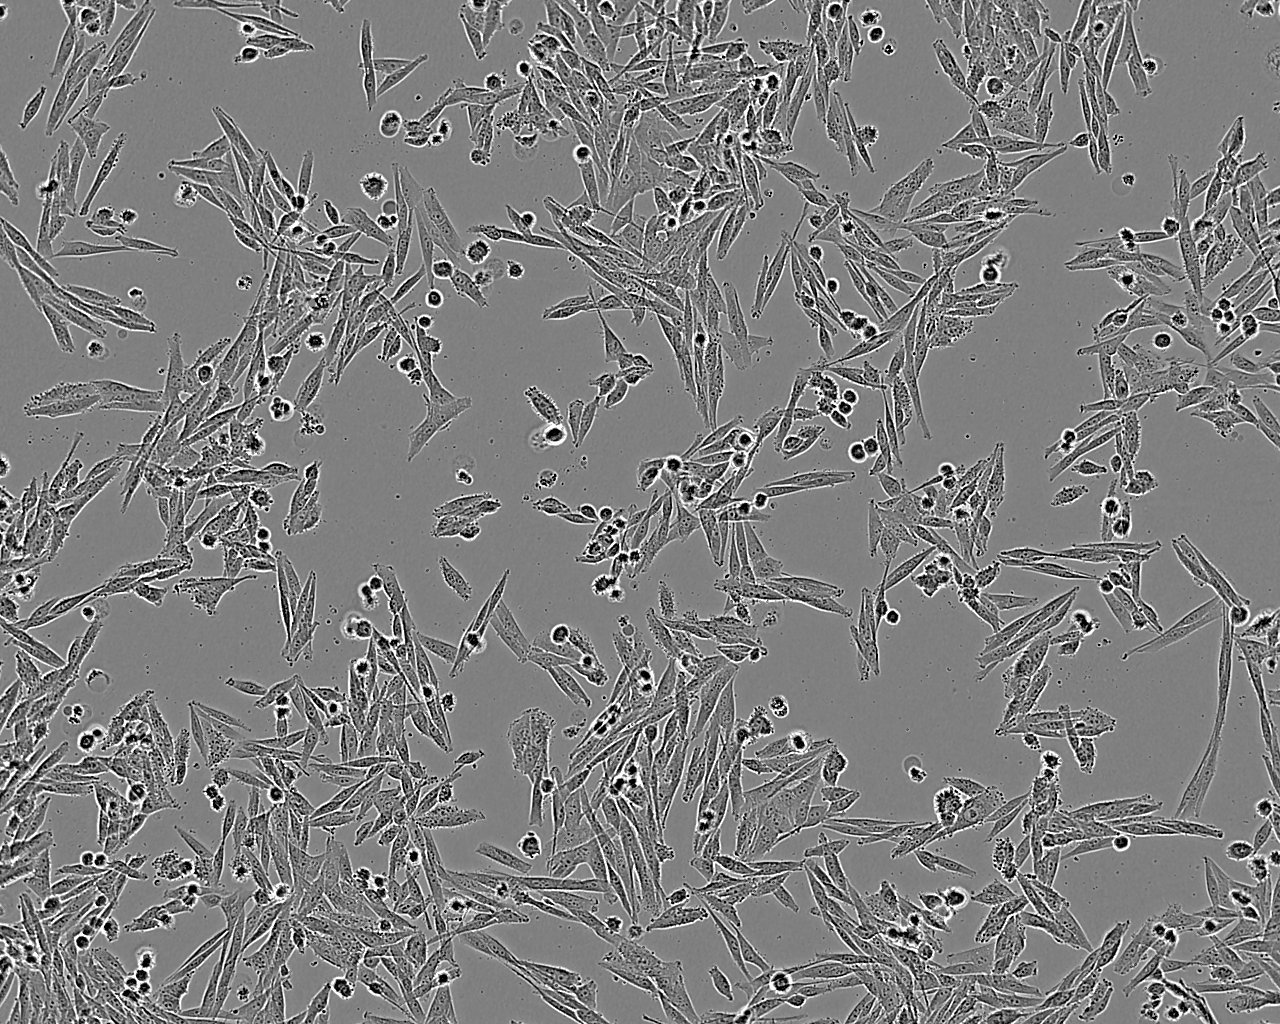 MIN6 Cell:小鼠胰岛β细胞系,MIN6 Cell